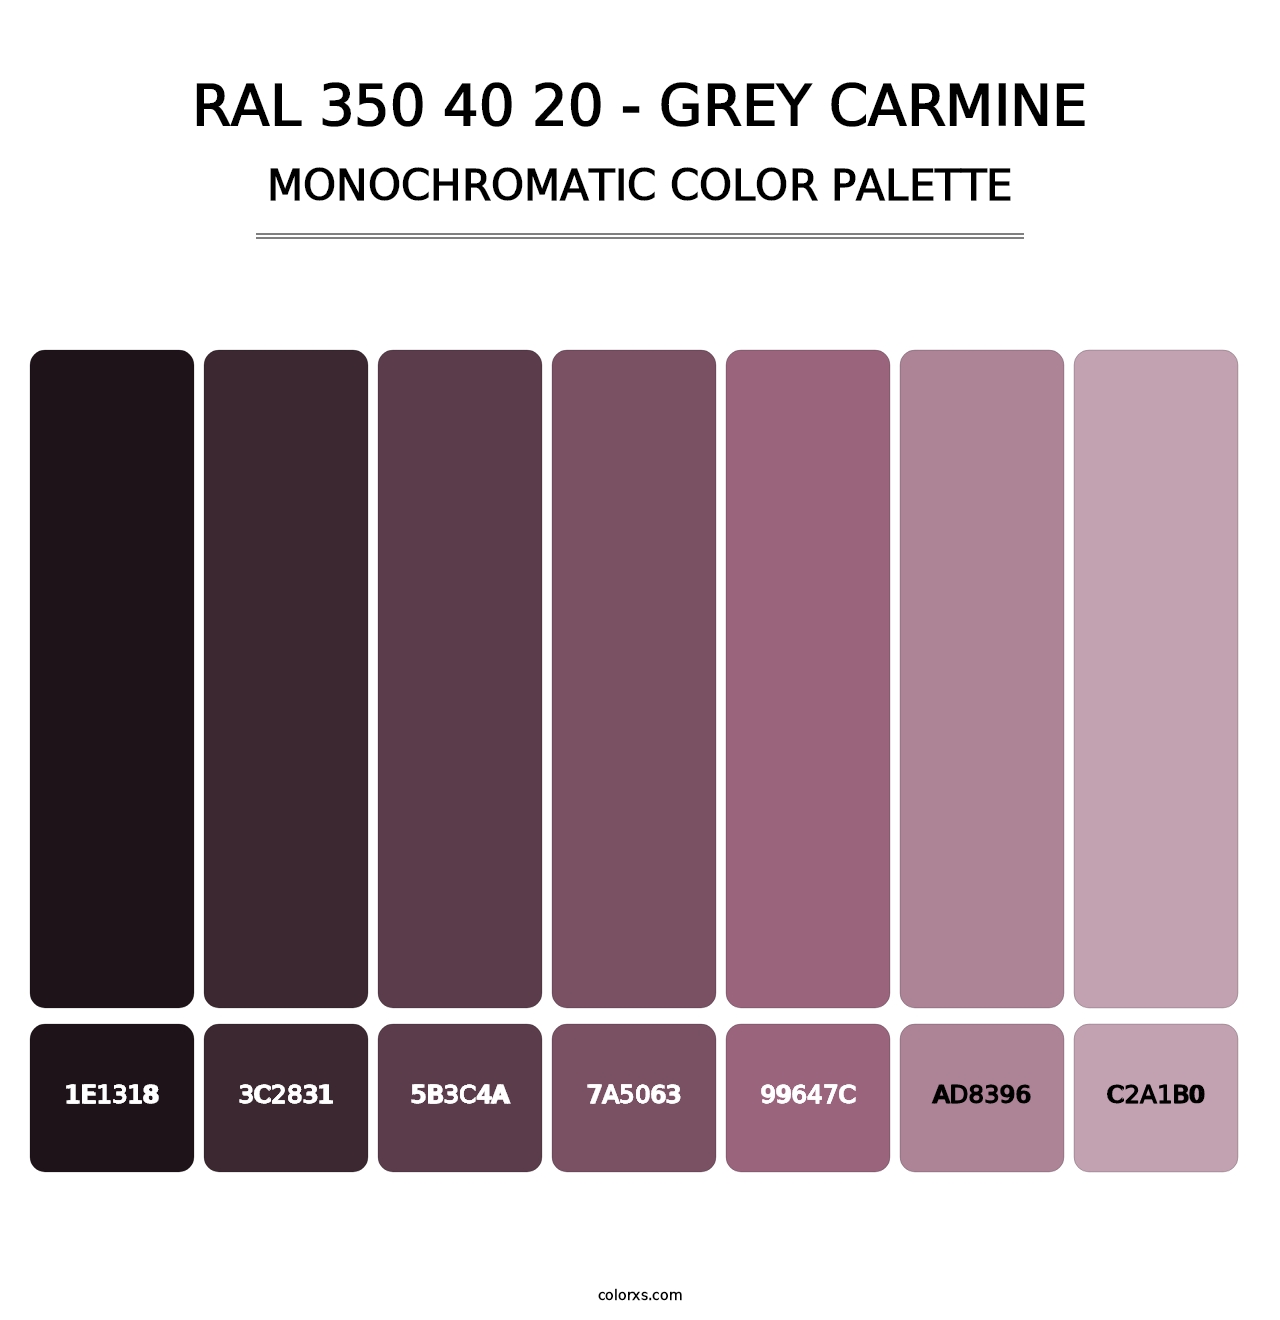 RAL 350 40 20 - Grey Carmine - Monochromatic Color Palette